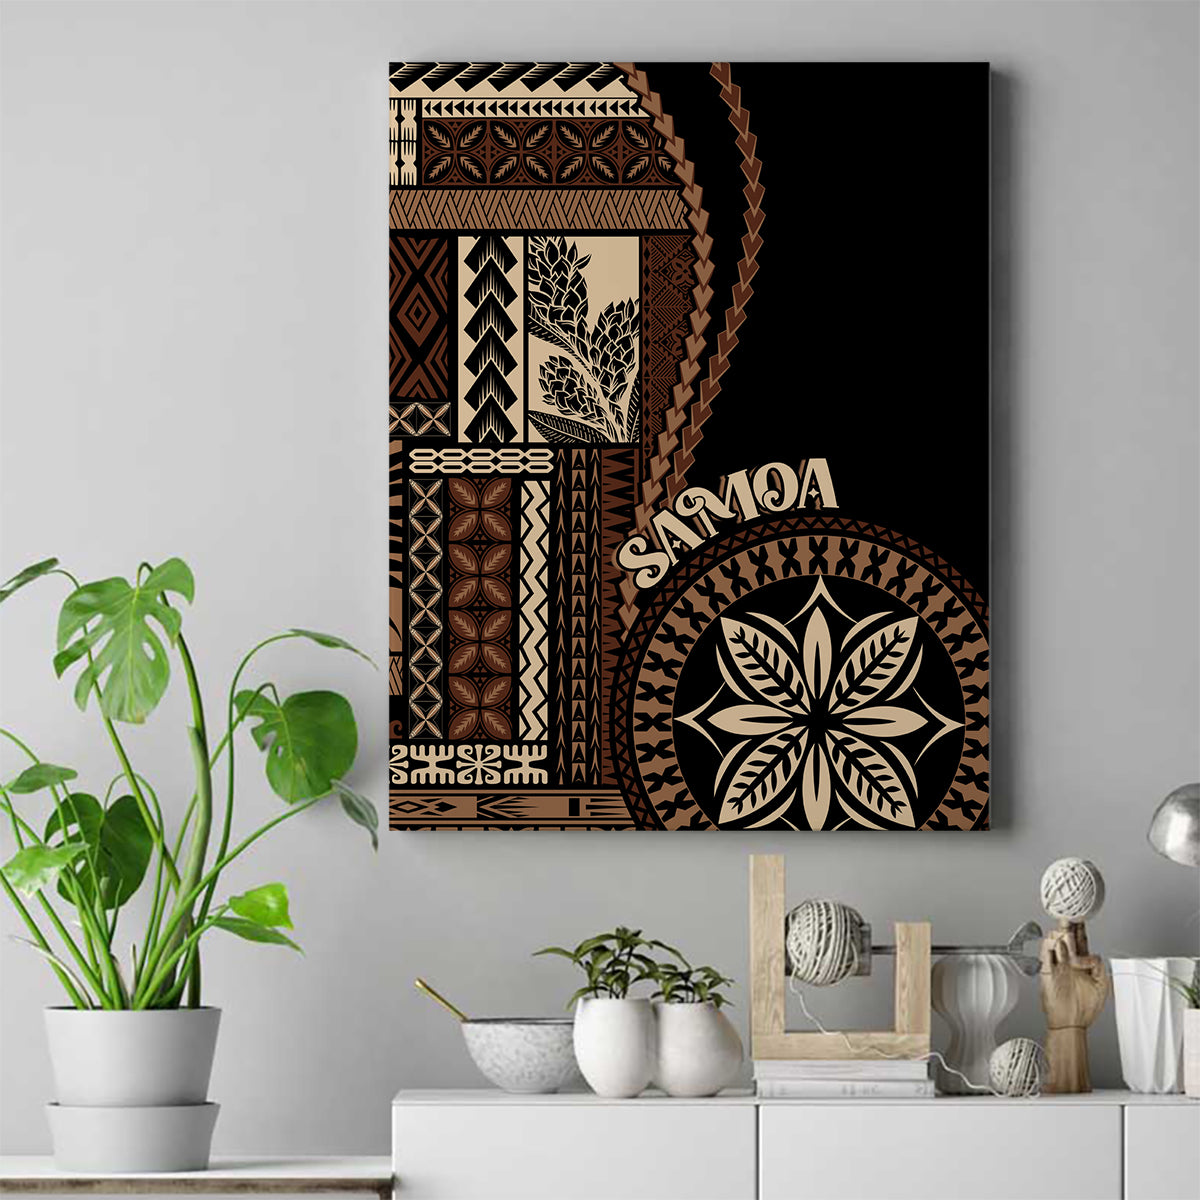 Samoa Siapo Motif Canvas Wall Art Classic Style - Black Ver LT7 Black - Polynesian Pride